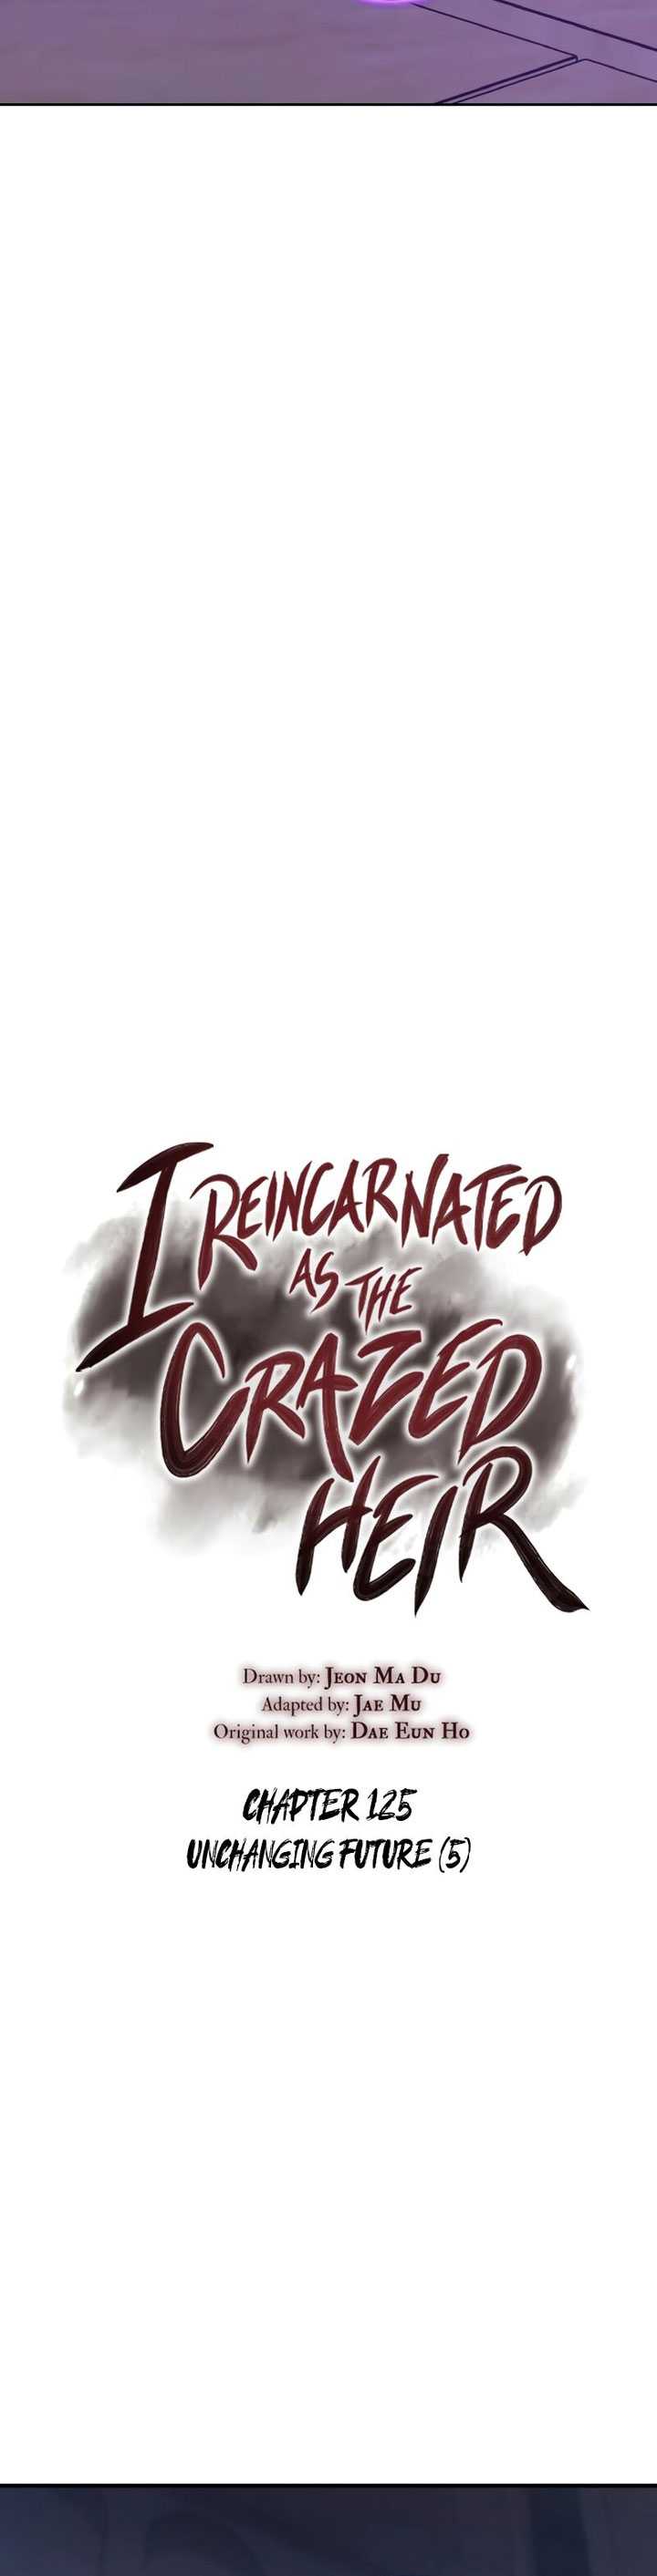 I Reincarnated As the Crazed Heir Chapter 125